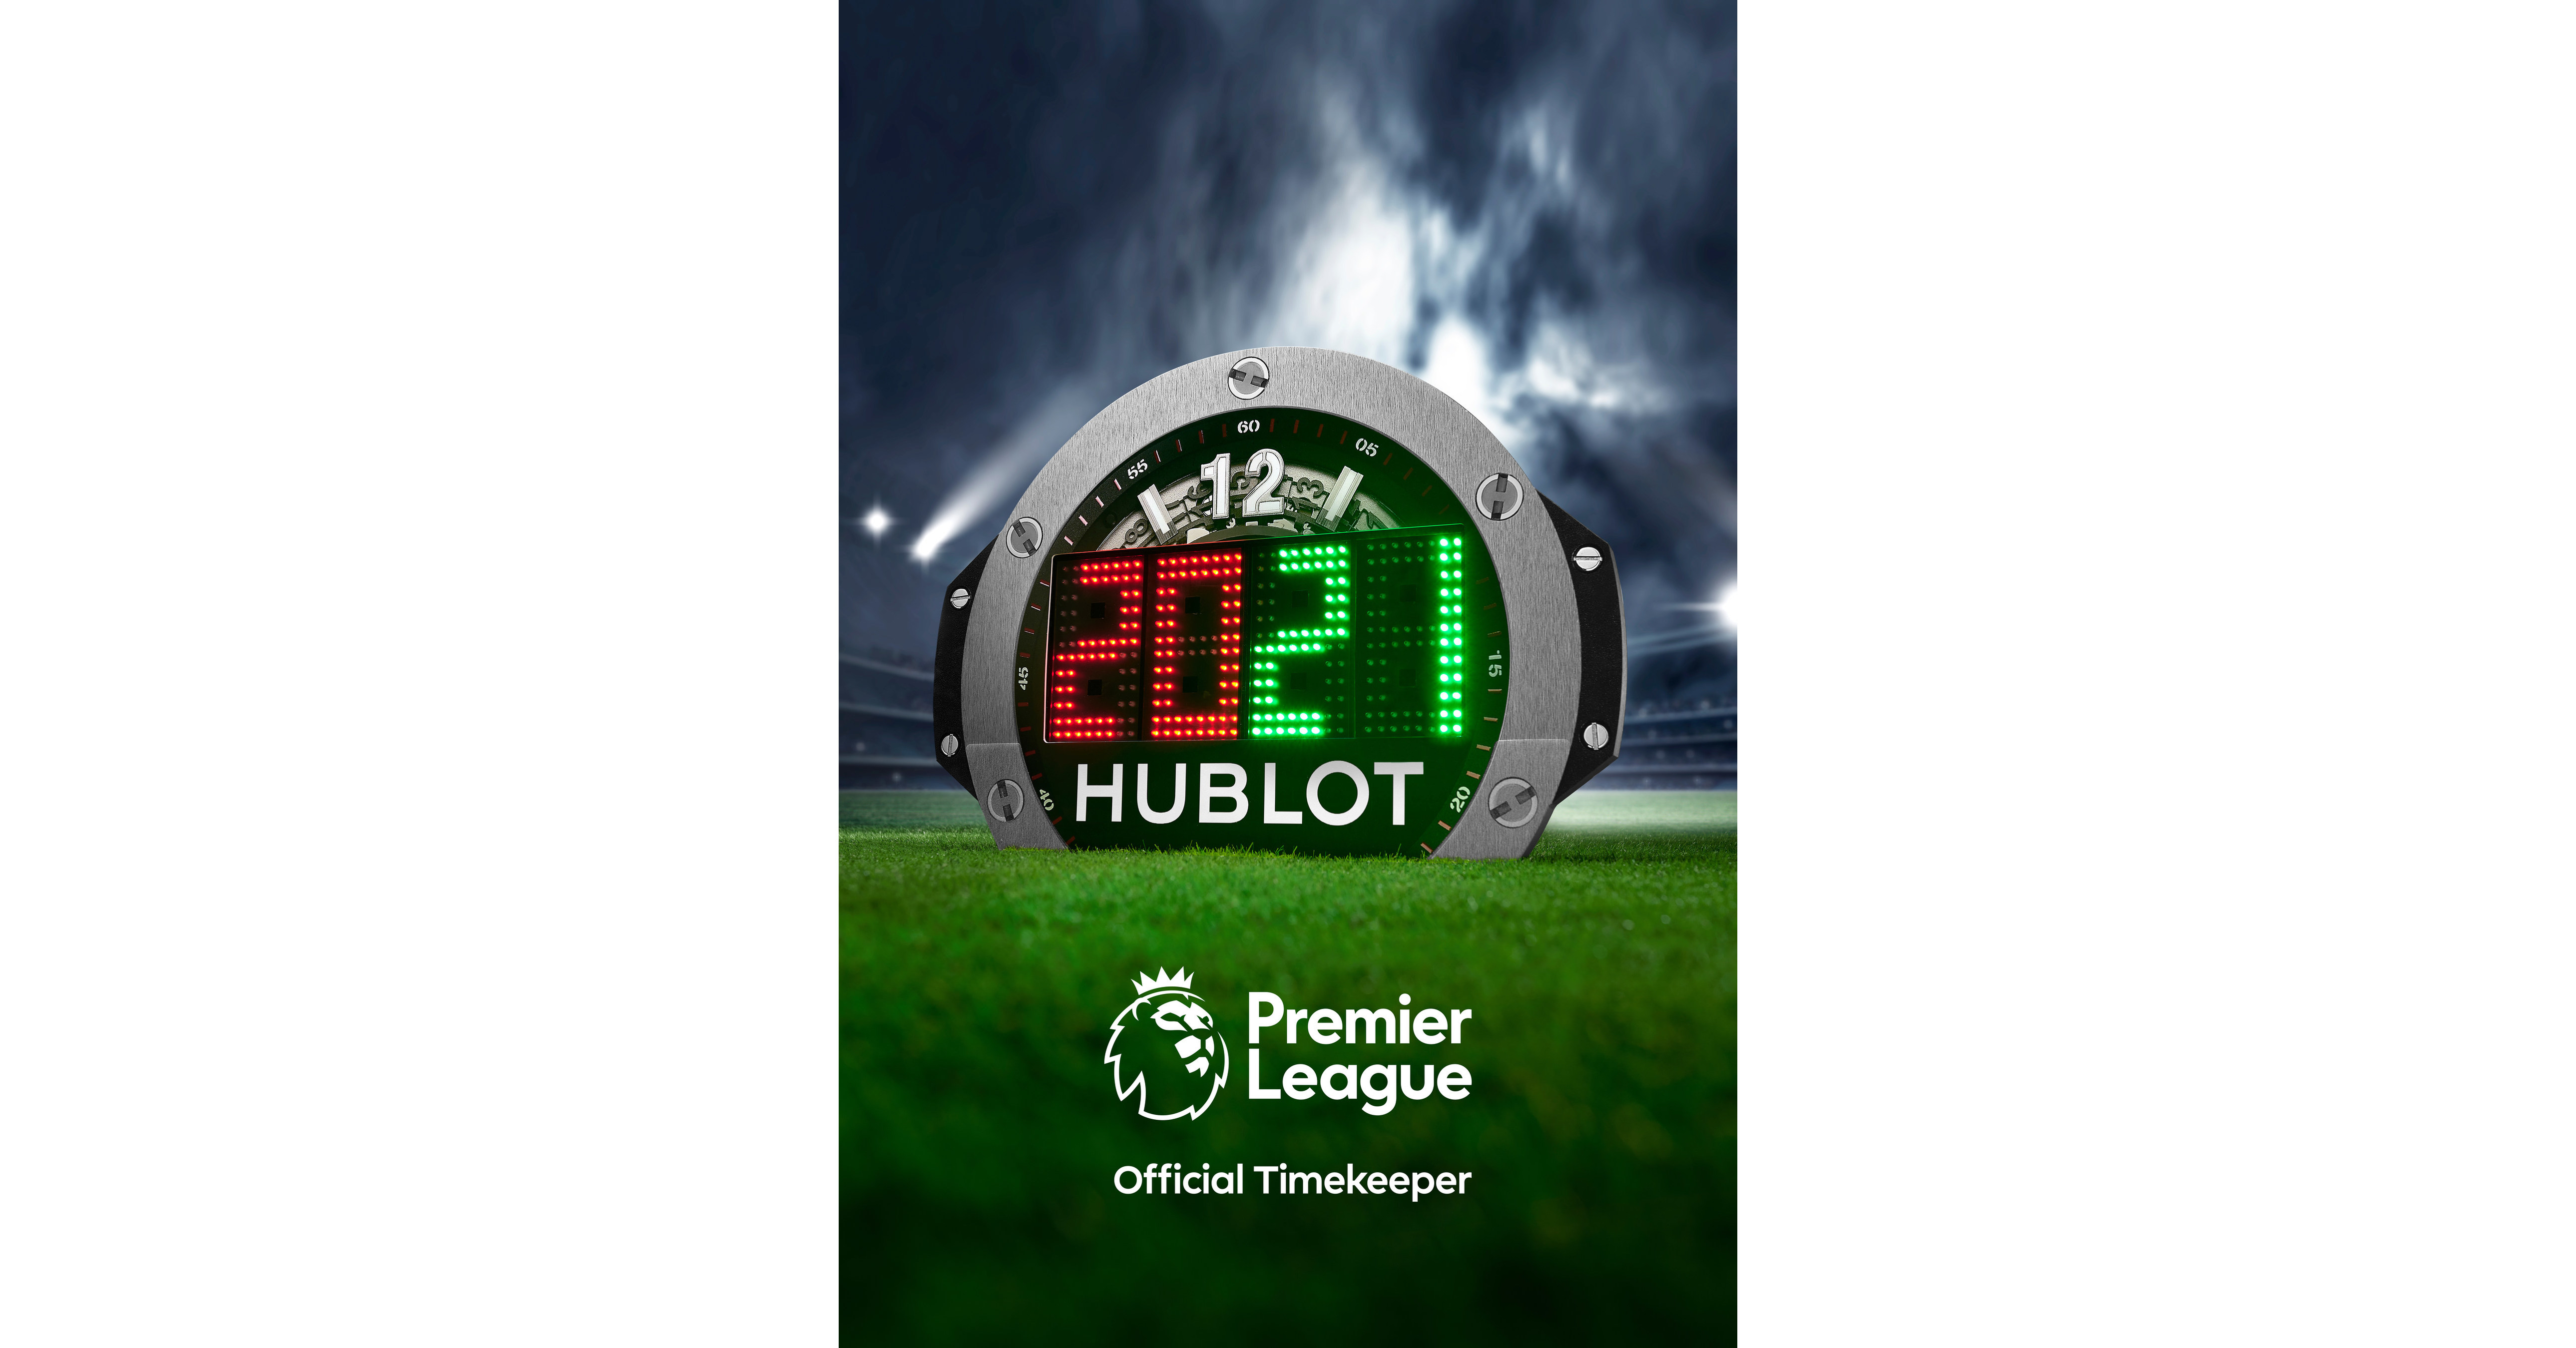 Premier League signs Hublot as timekeeper as Tag Heuer turns to motorsport